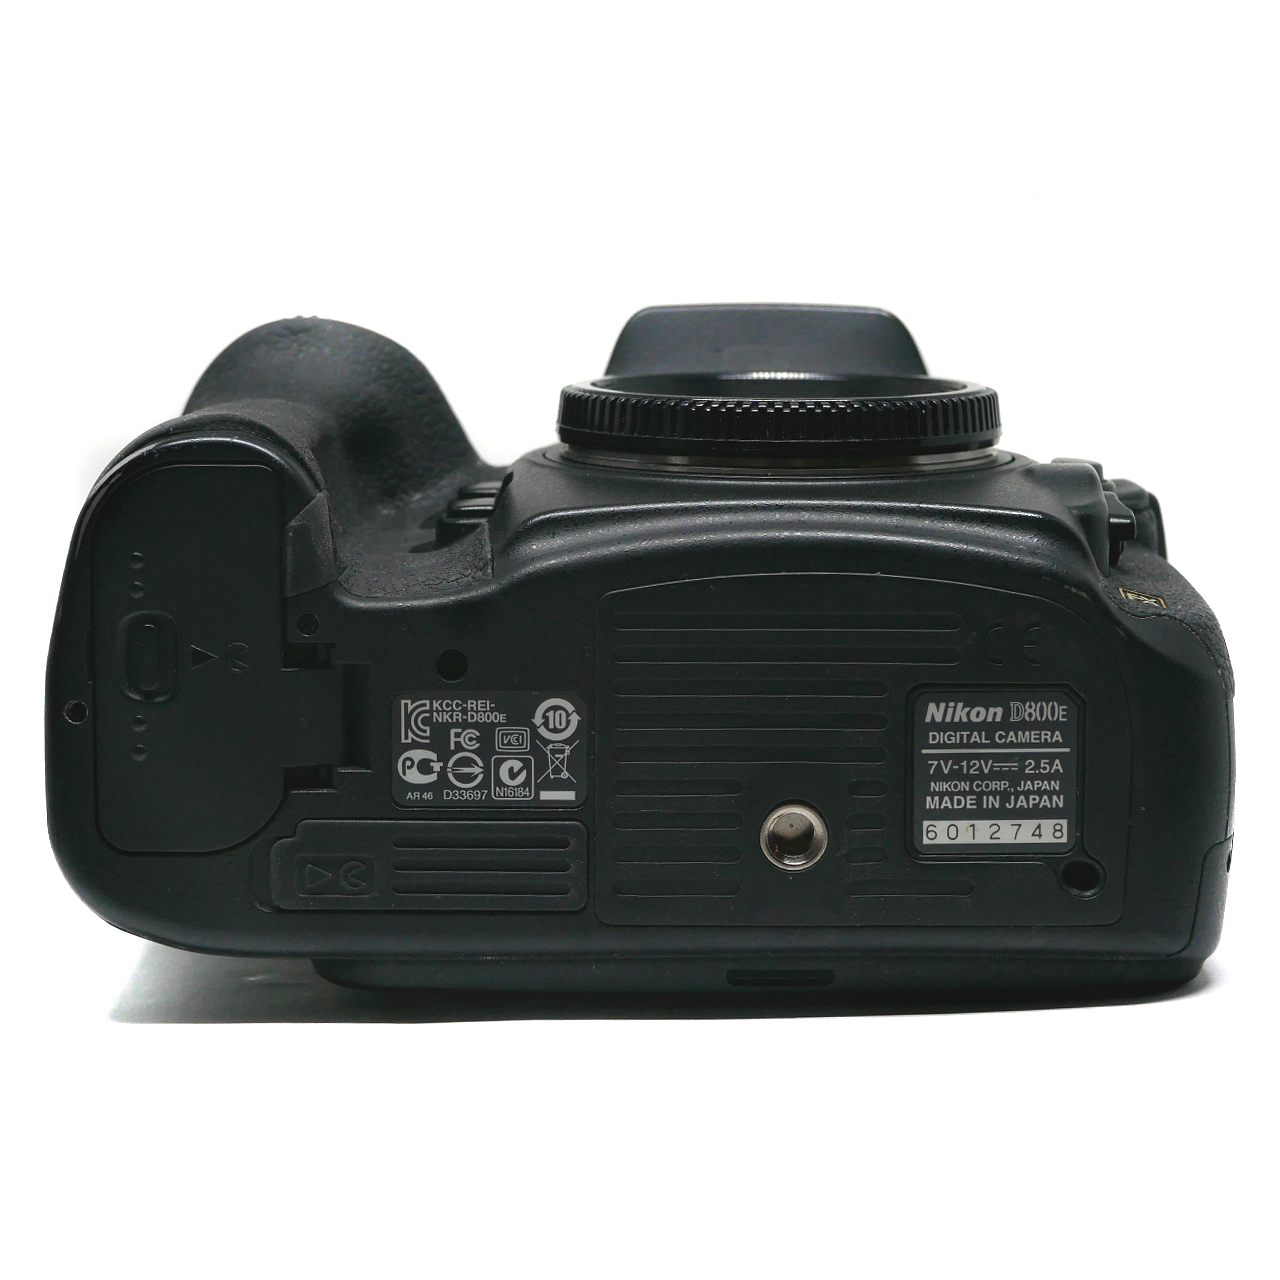 (myyty) Nikon D800e runko (SC: 115080) + akkukahva (käytetty)